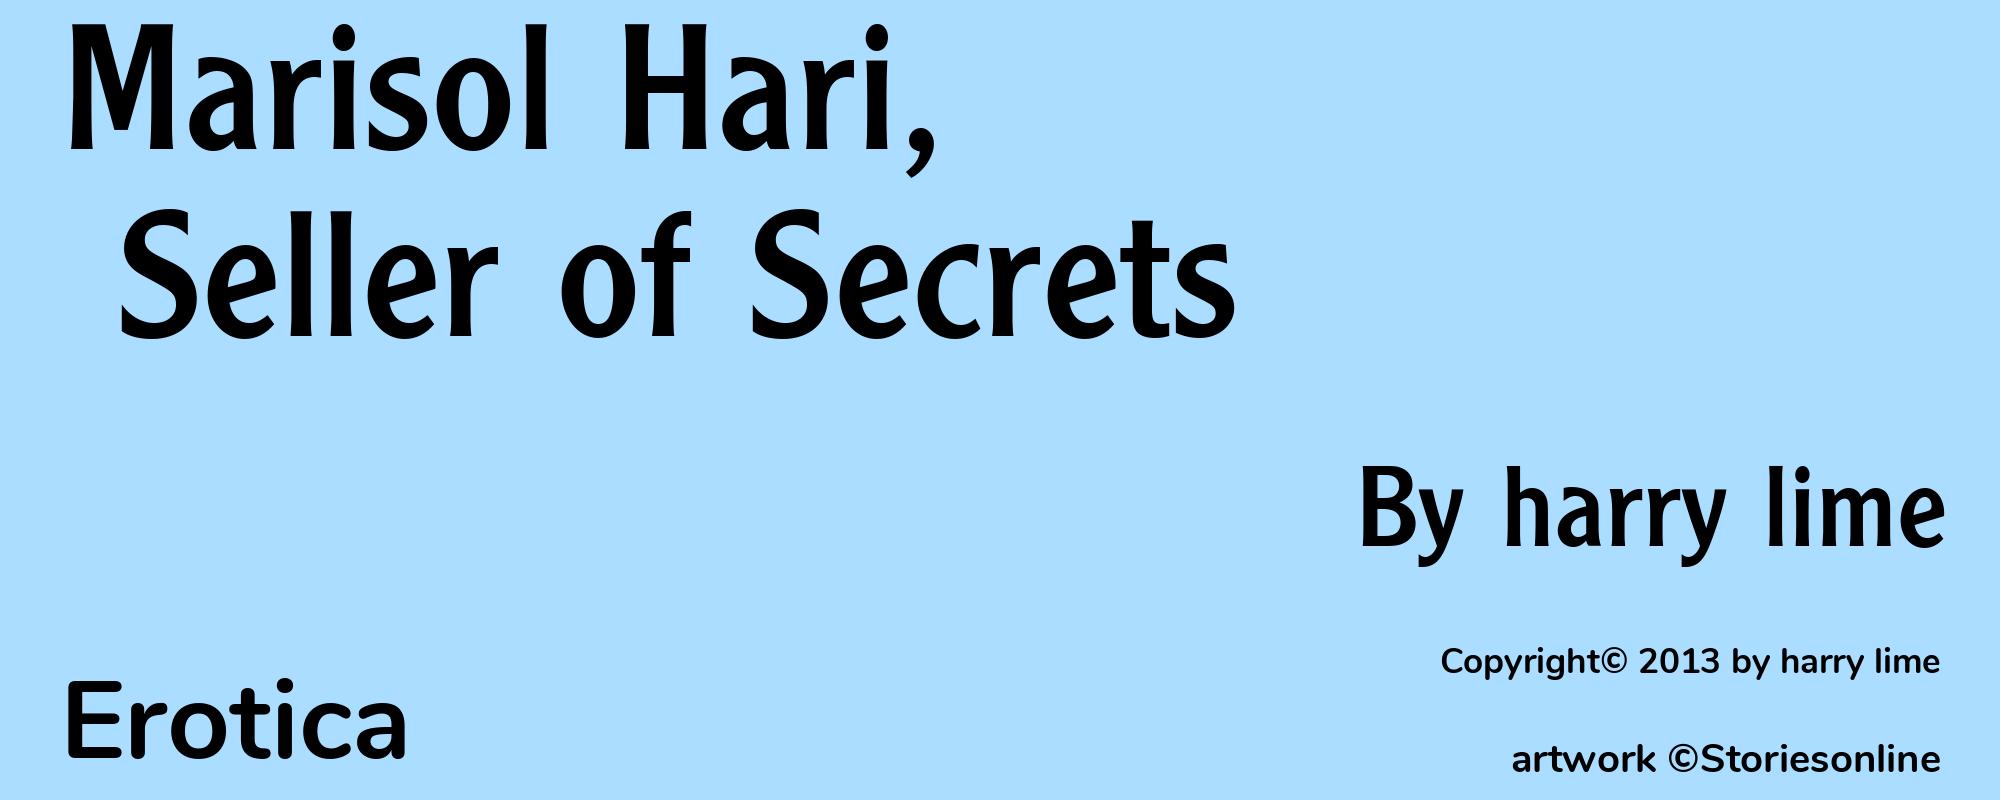 Marisol Hari, Seller of Secrets - Cover